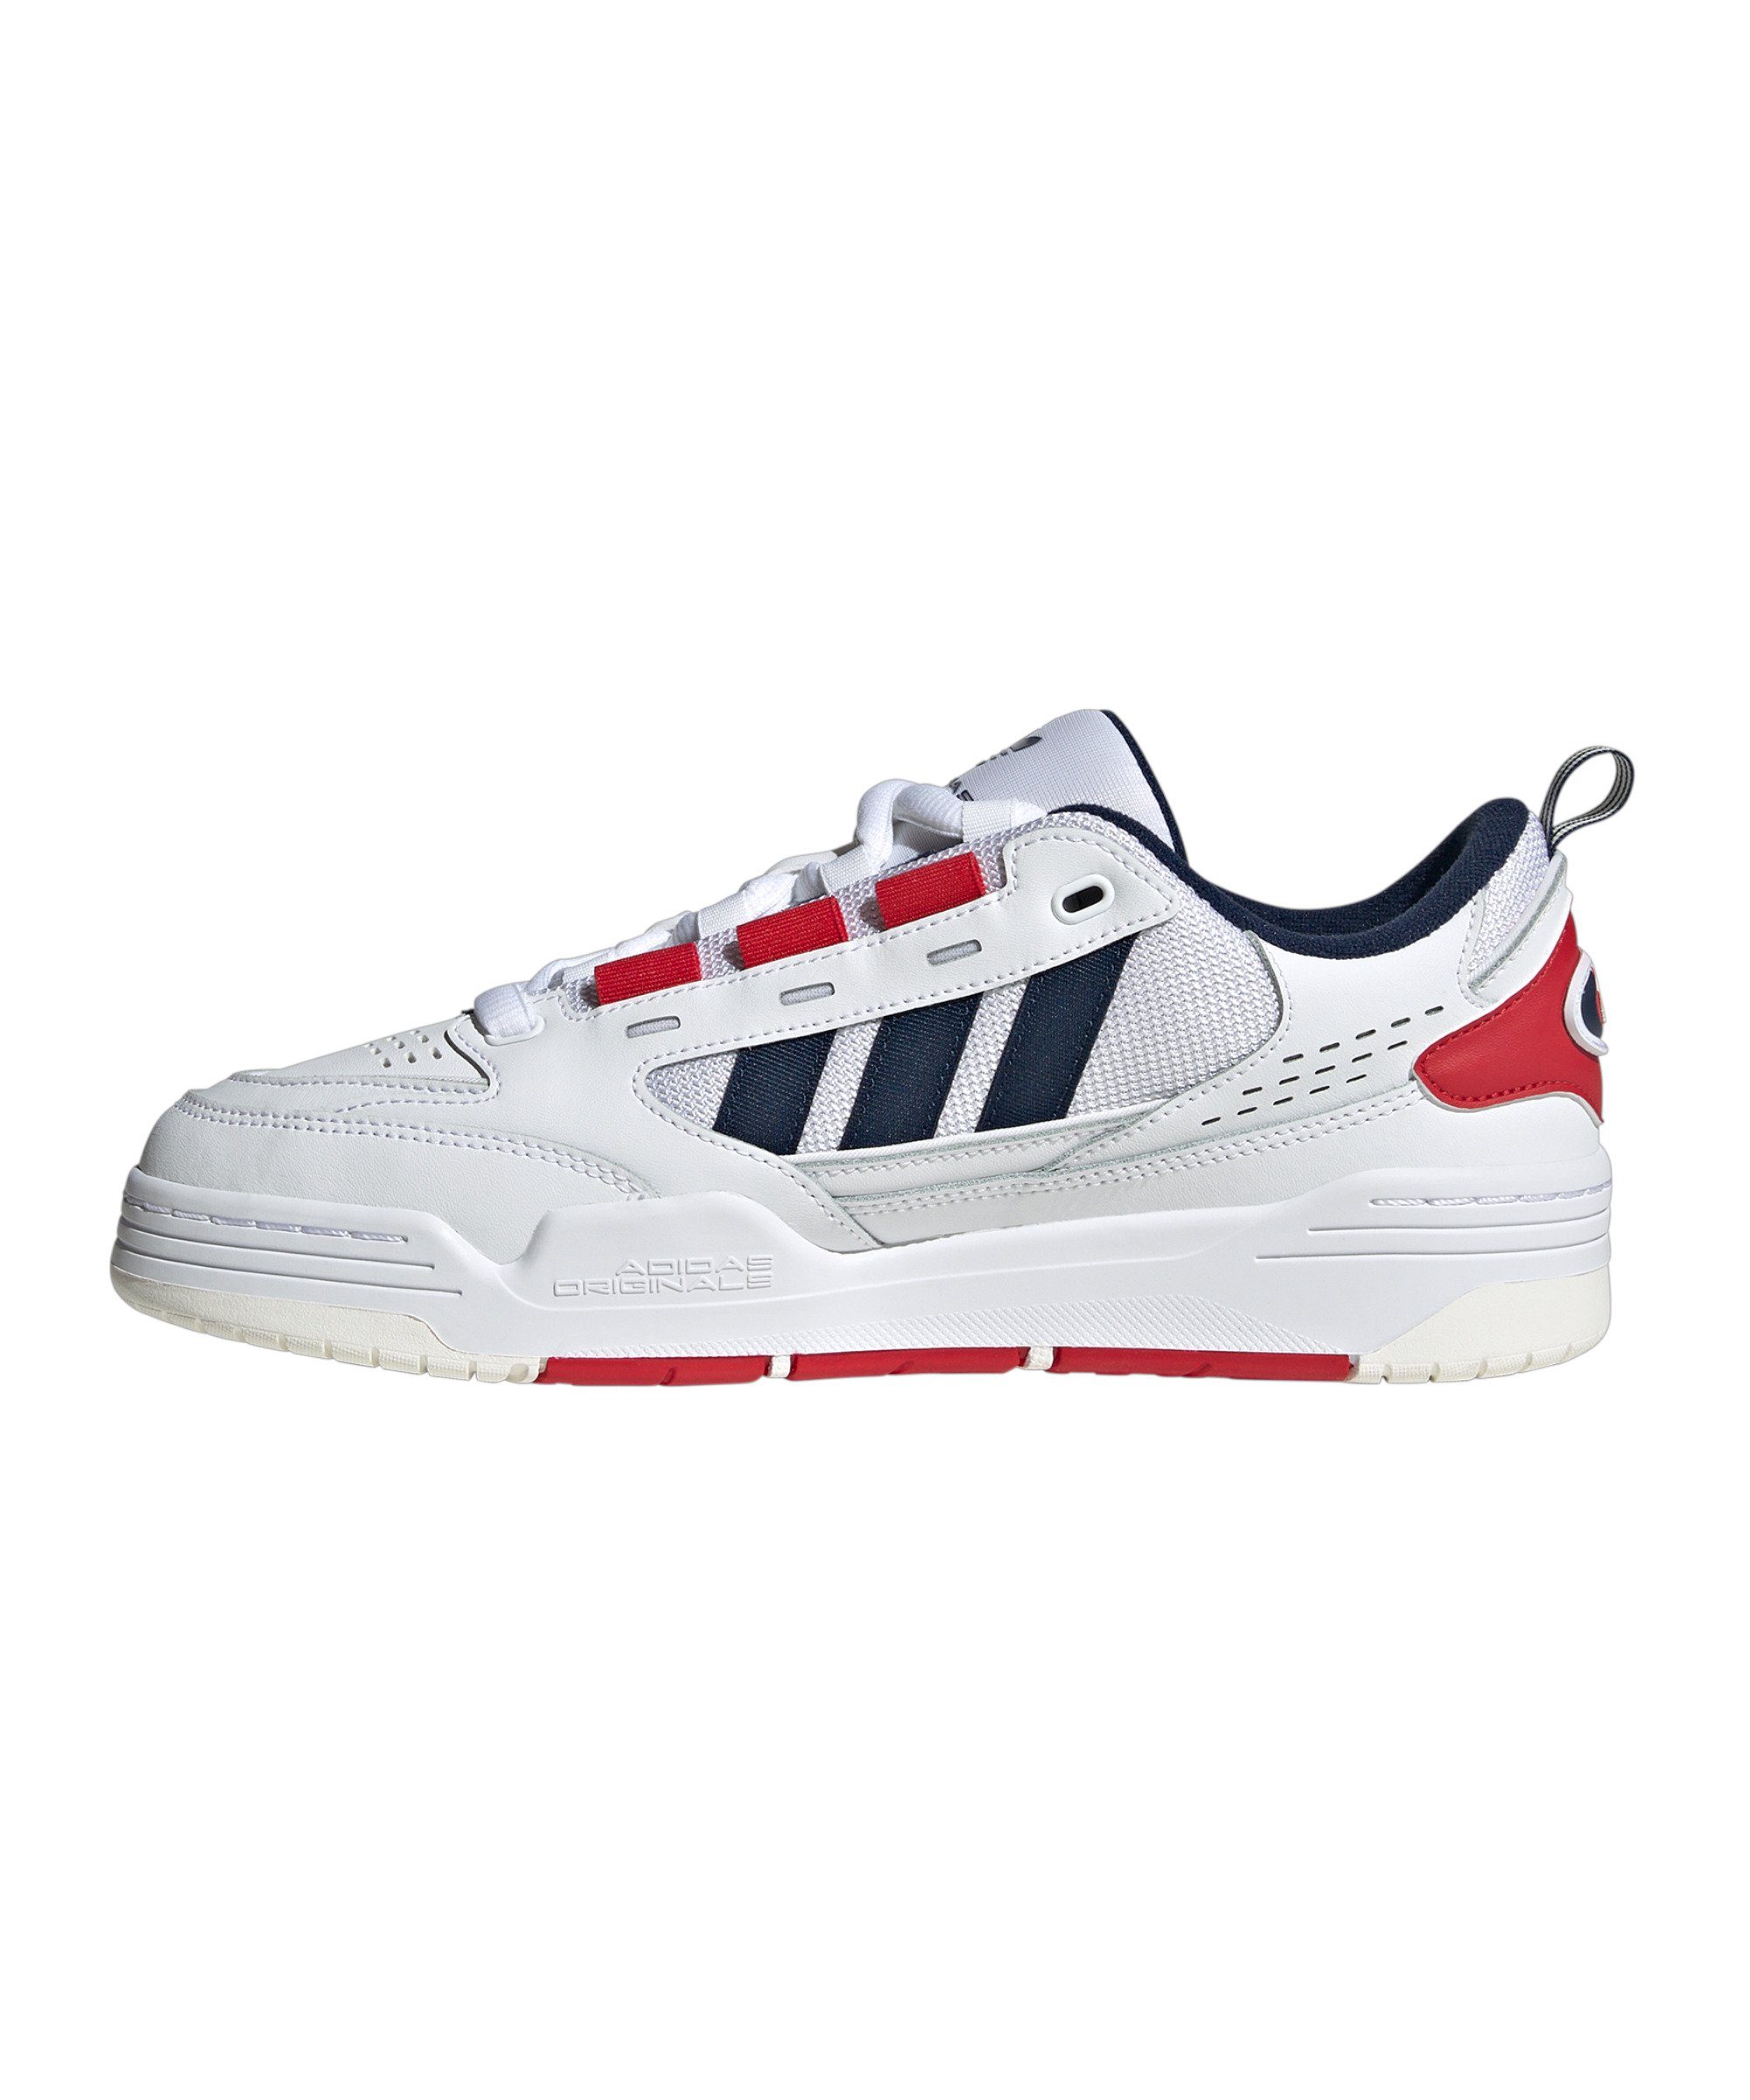 adidas Originals Adi2000 Sneaker weissblaurot